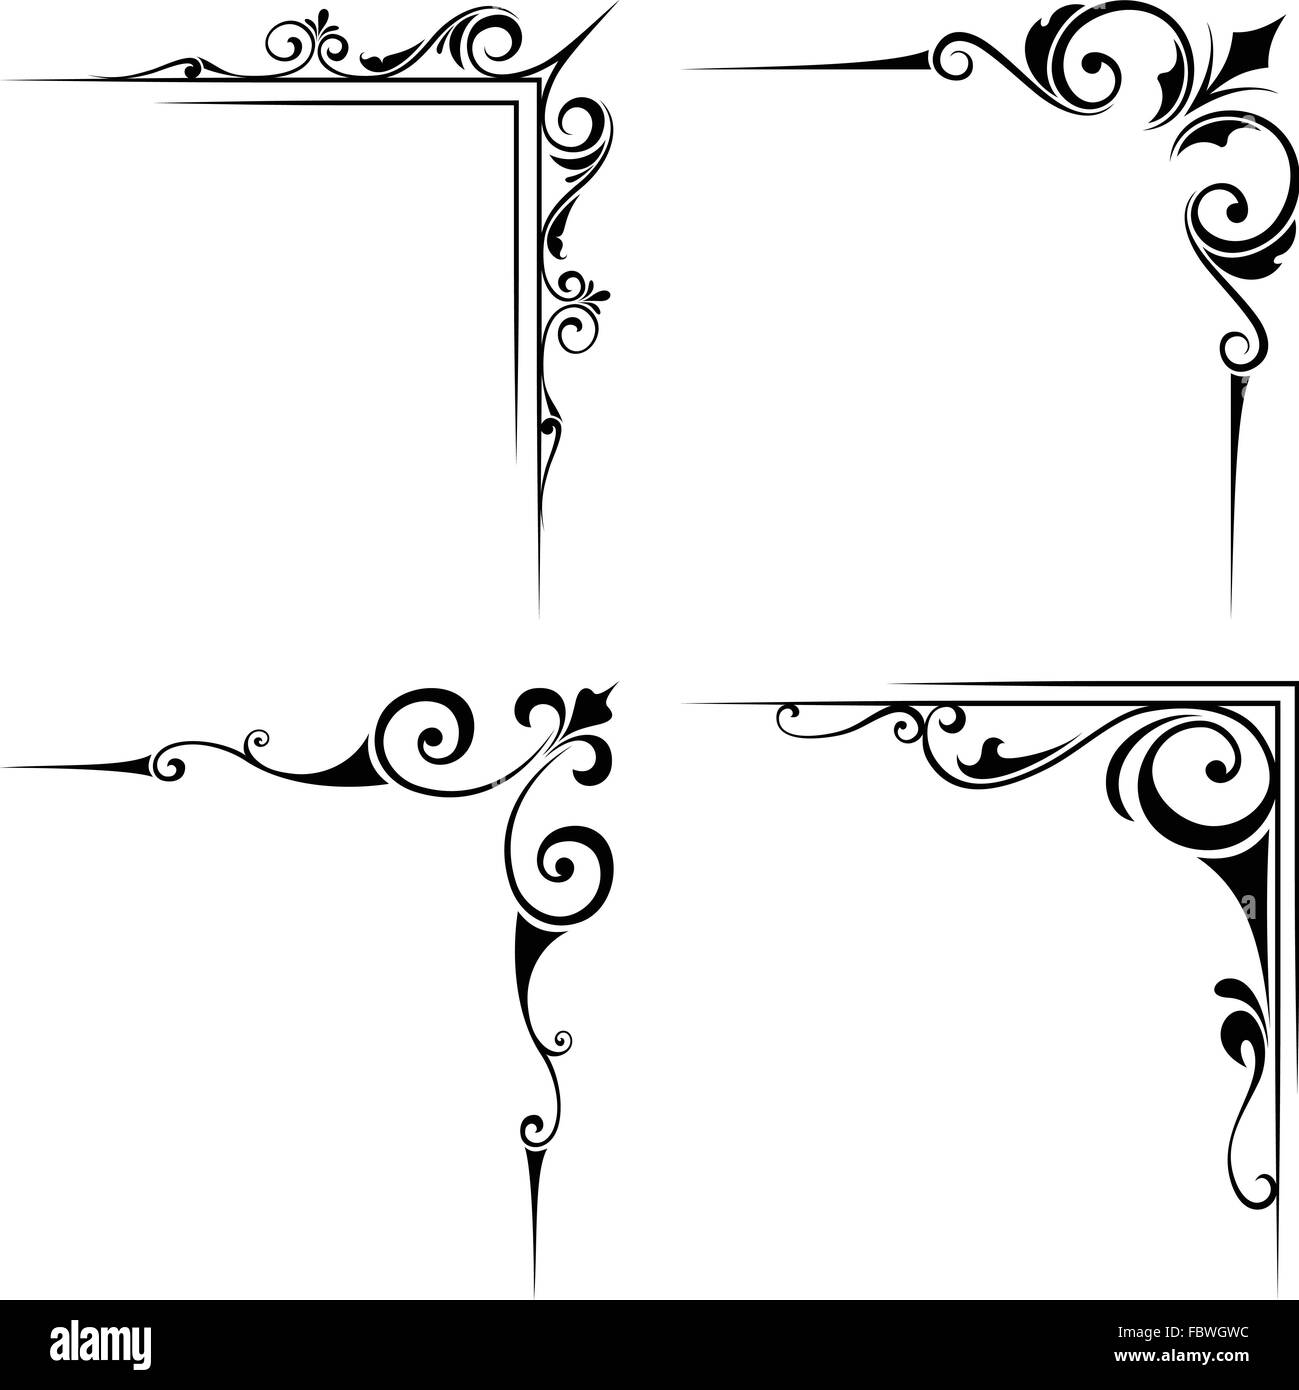 Calligraphic decorative black corner elements. Vector illustration. Stock Vector